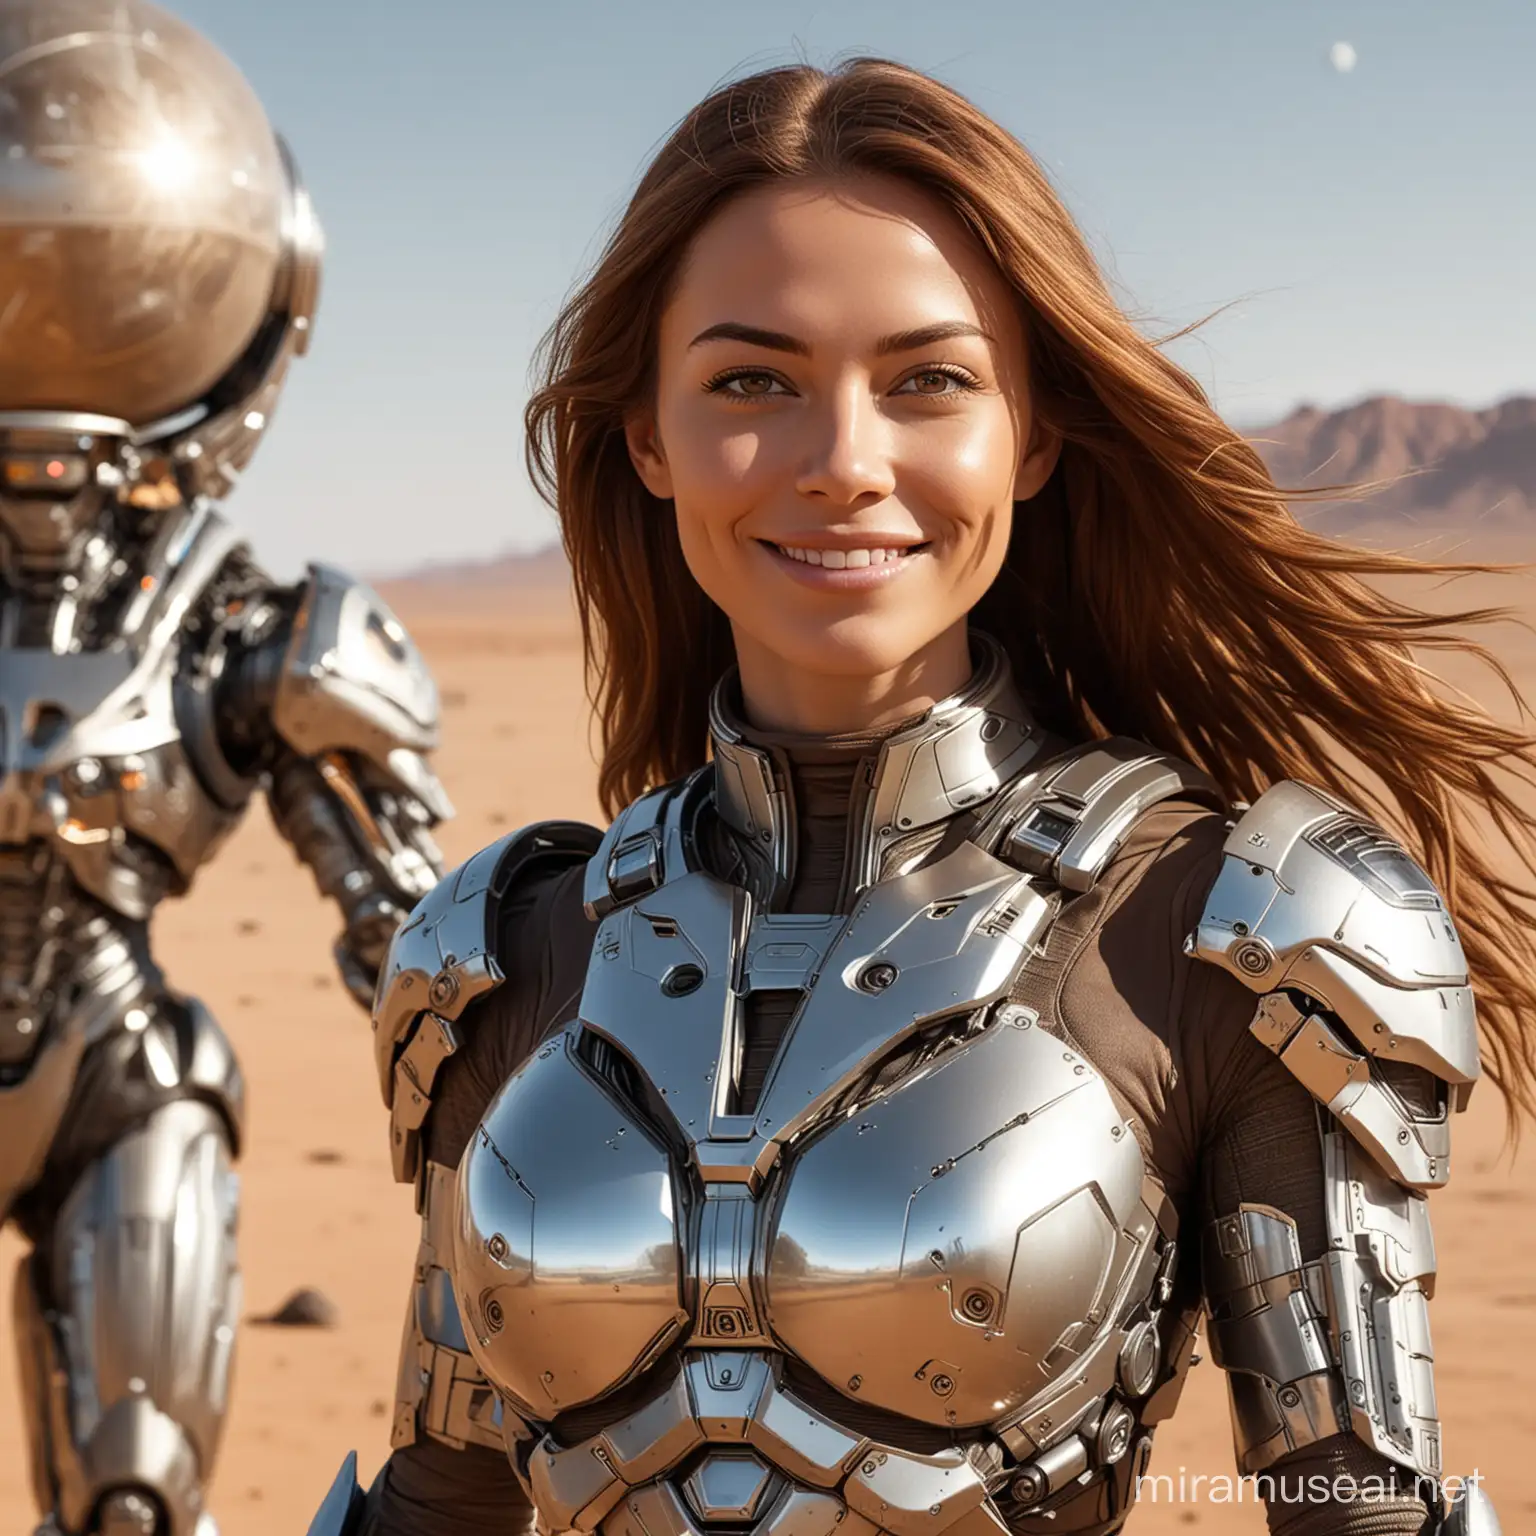 Futuristic Female Cyborg in Metallic Armor Smiling on Desert Planet